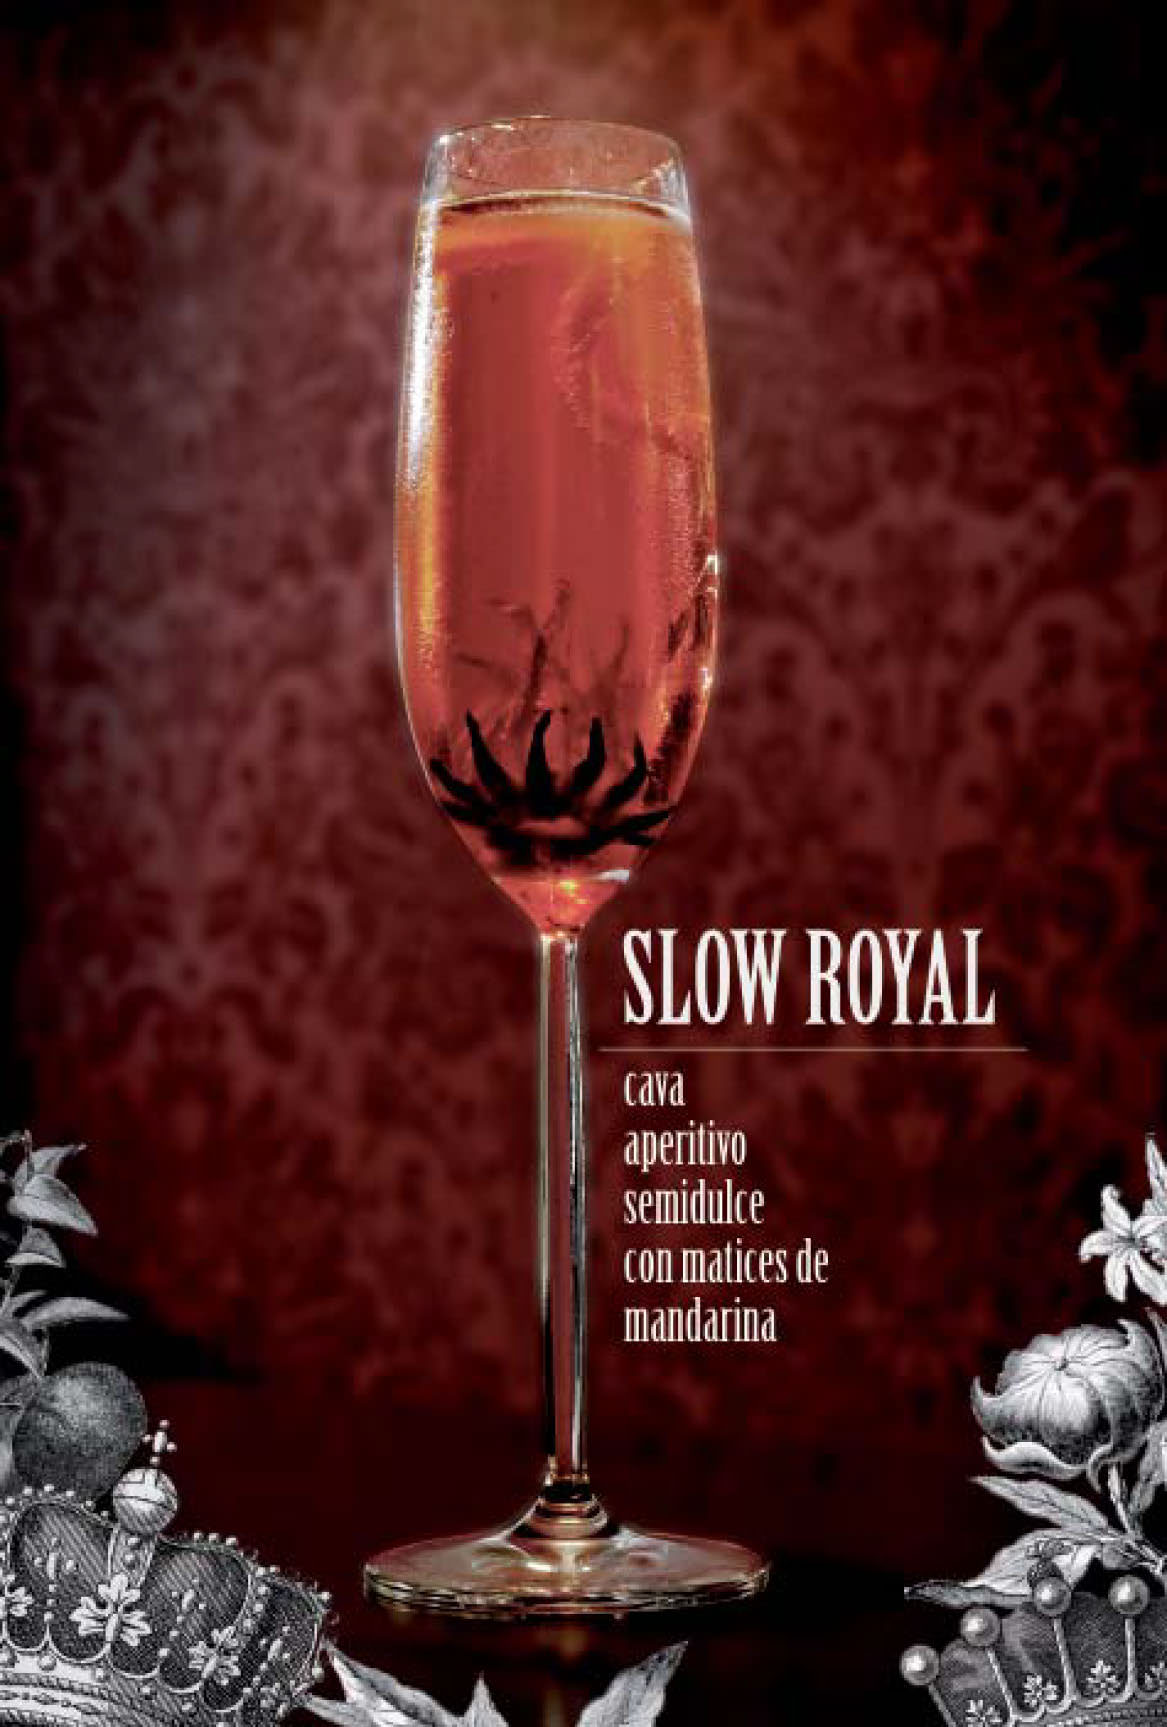 Slow Royal